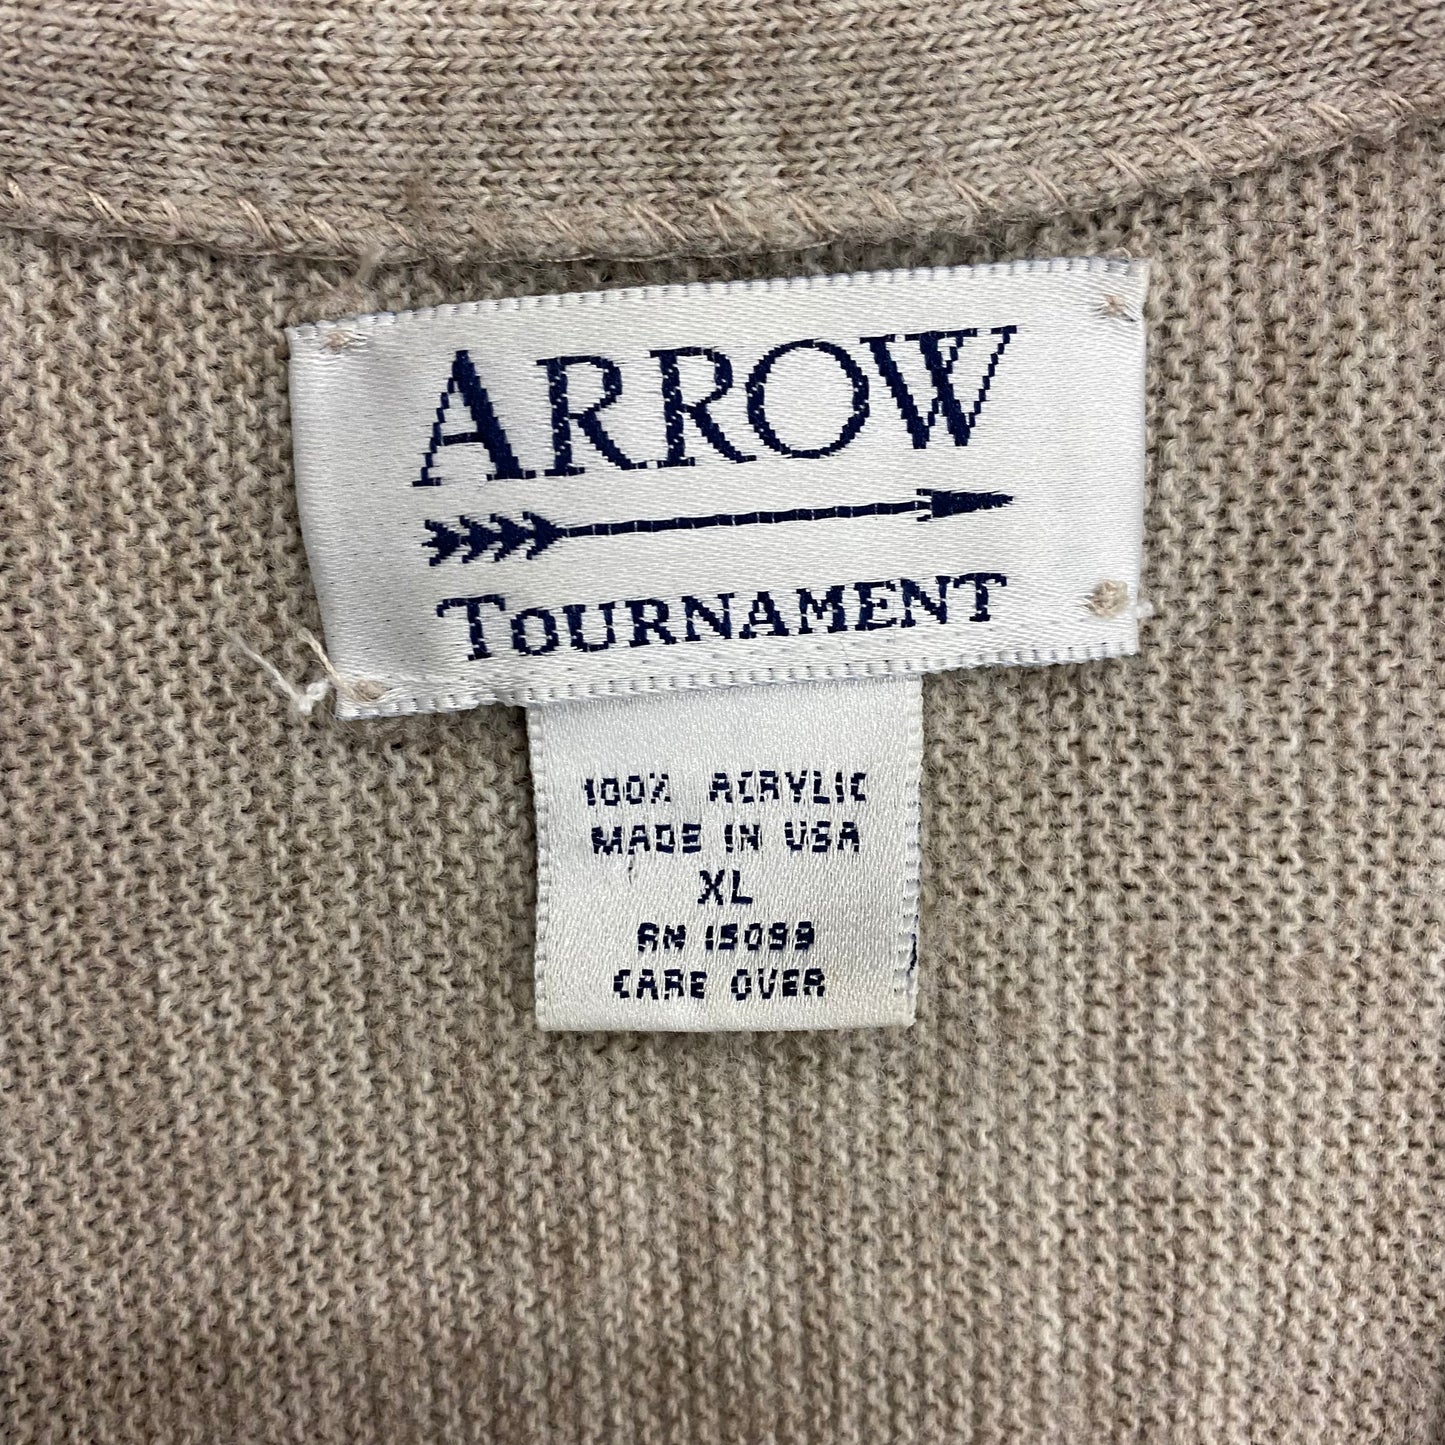 Vintage Tan Knit Acrylic Cardigan by Arrow Tournament - Size XL